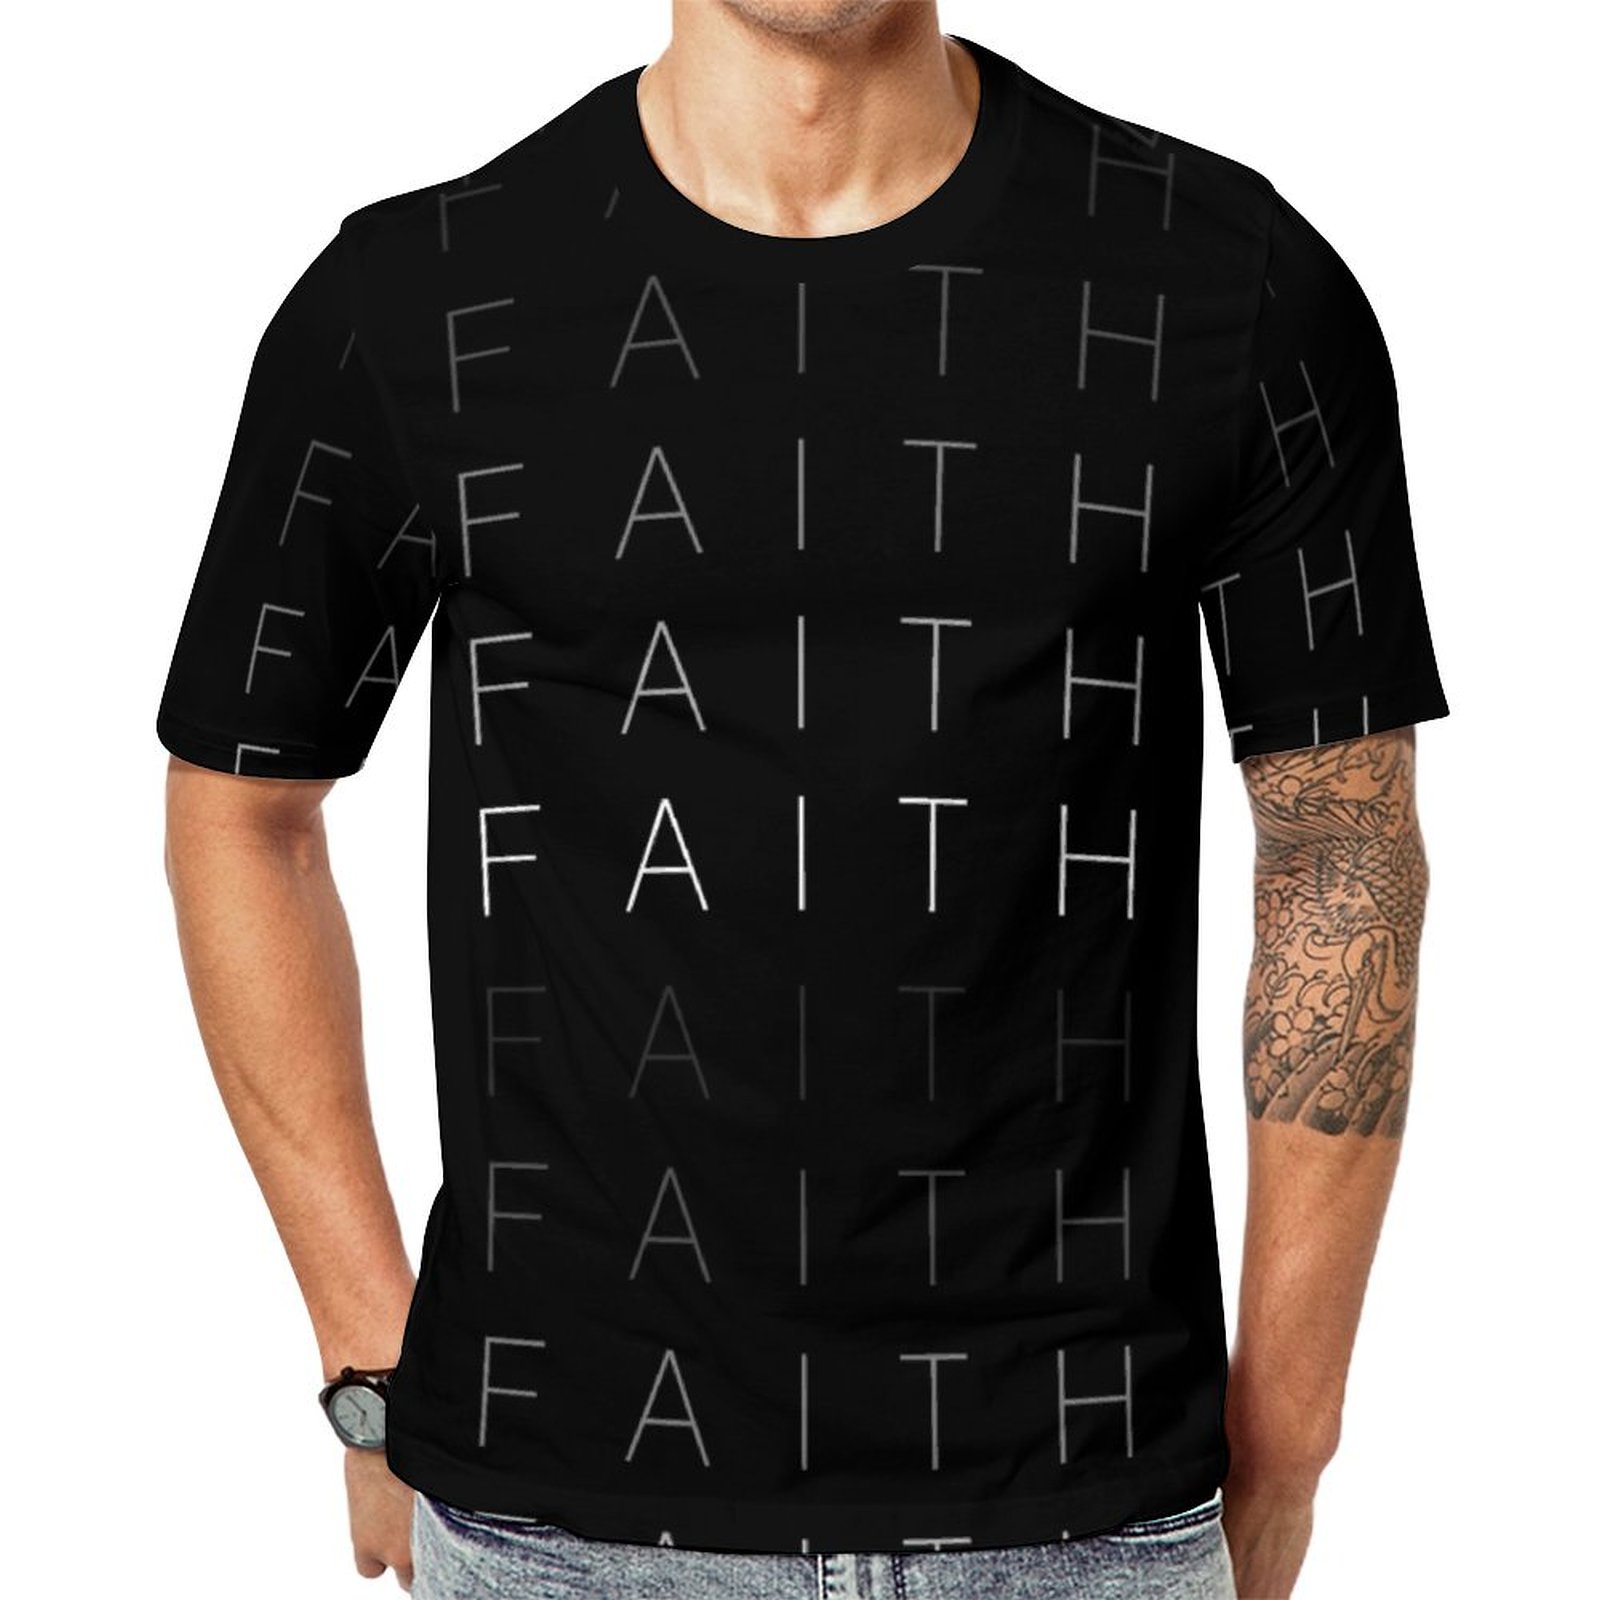 Black White Faith Christian Short Sleeve Print Unisex Tshirt Summer Casual Tees for Men and Women Coolcoshirts